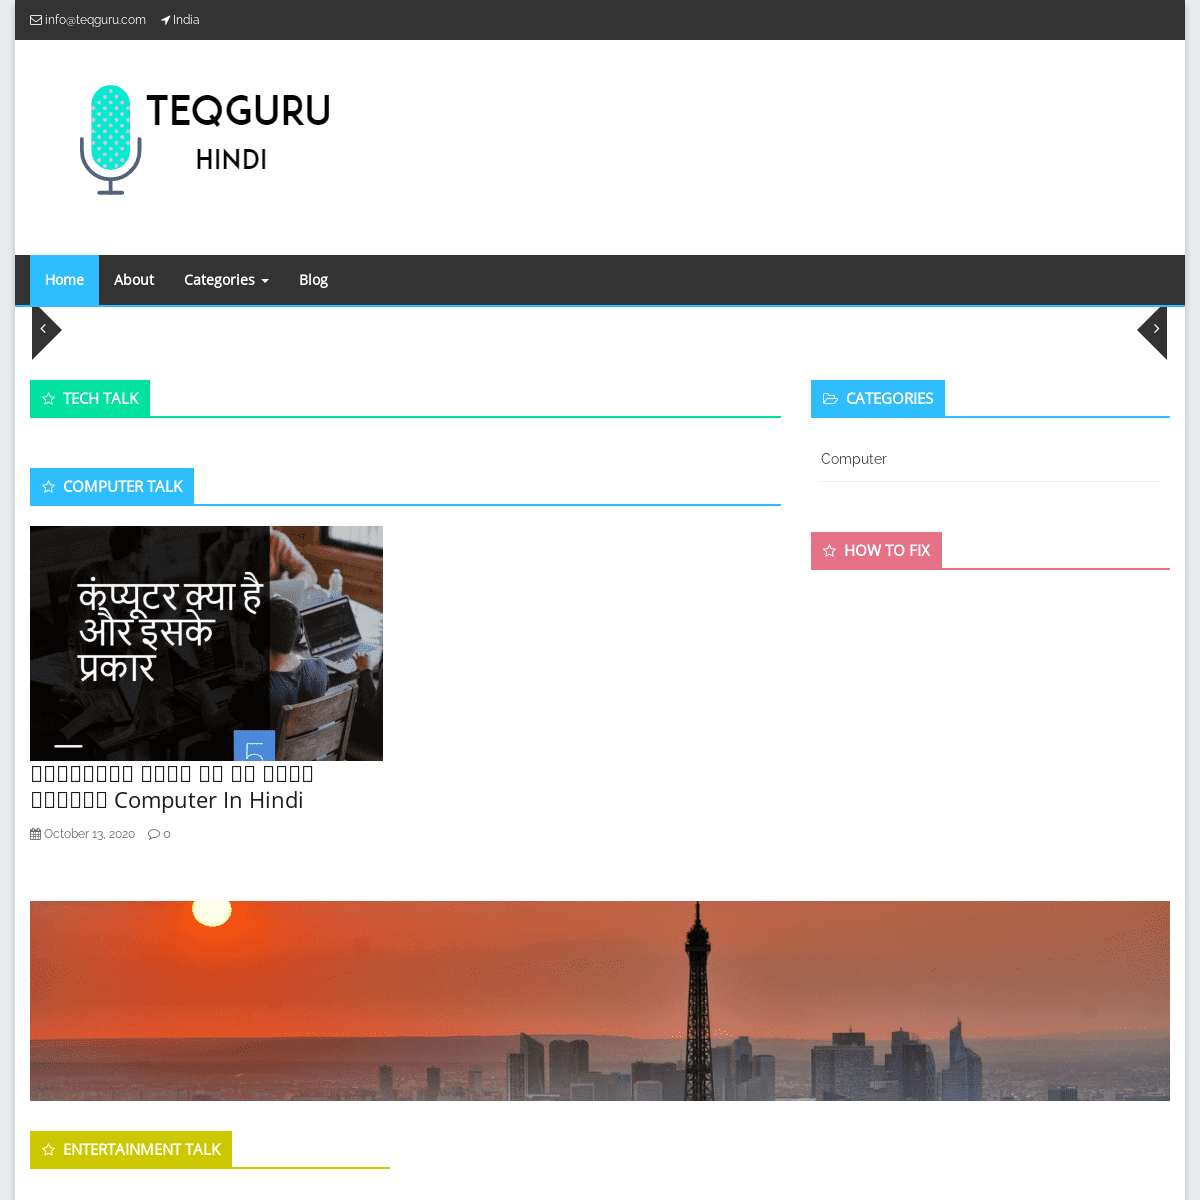 A complete backup of https://teqguru.com